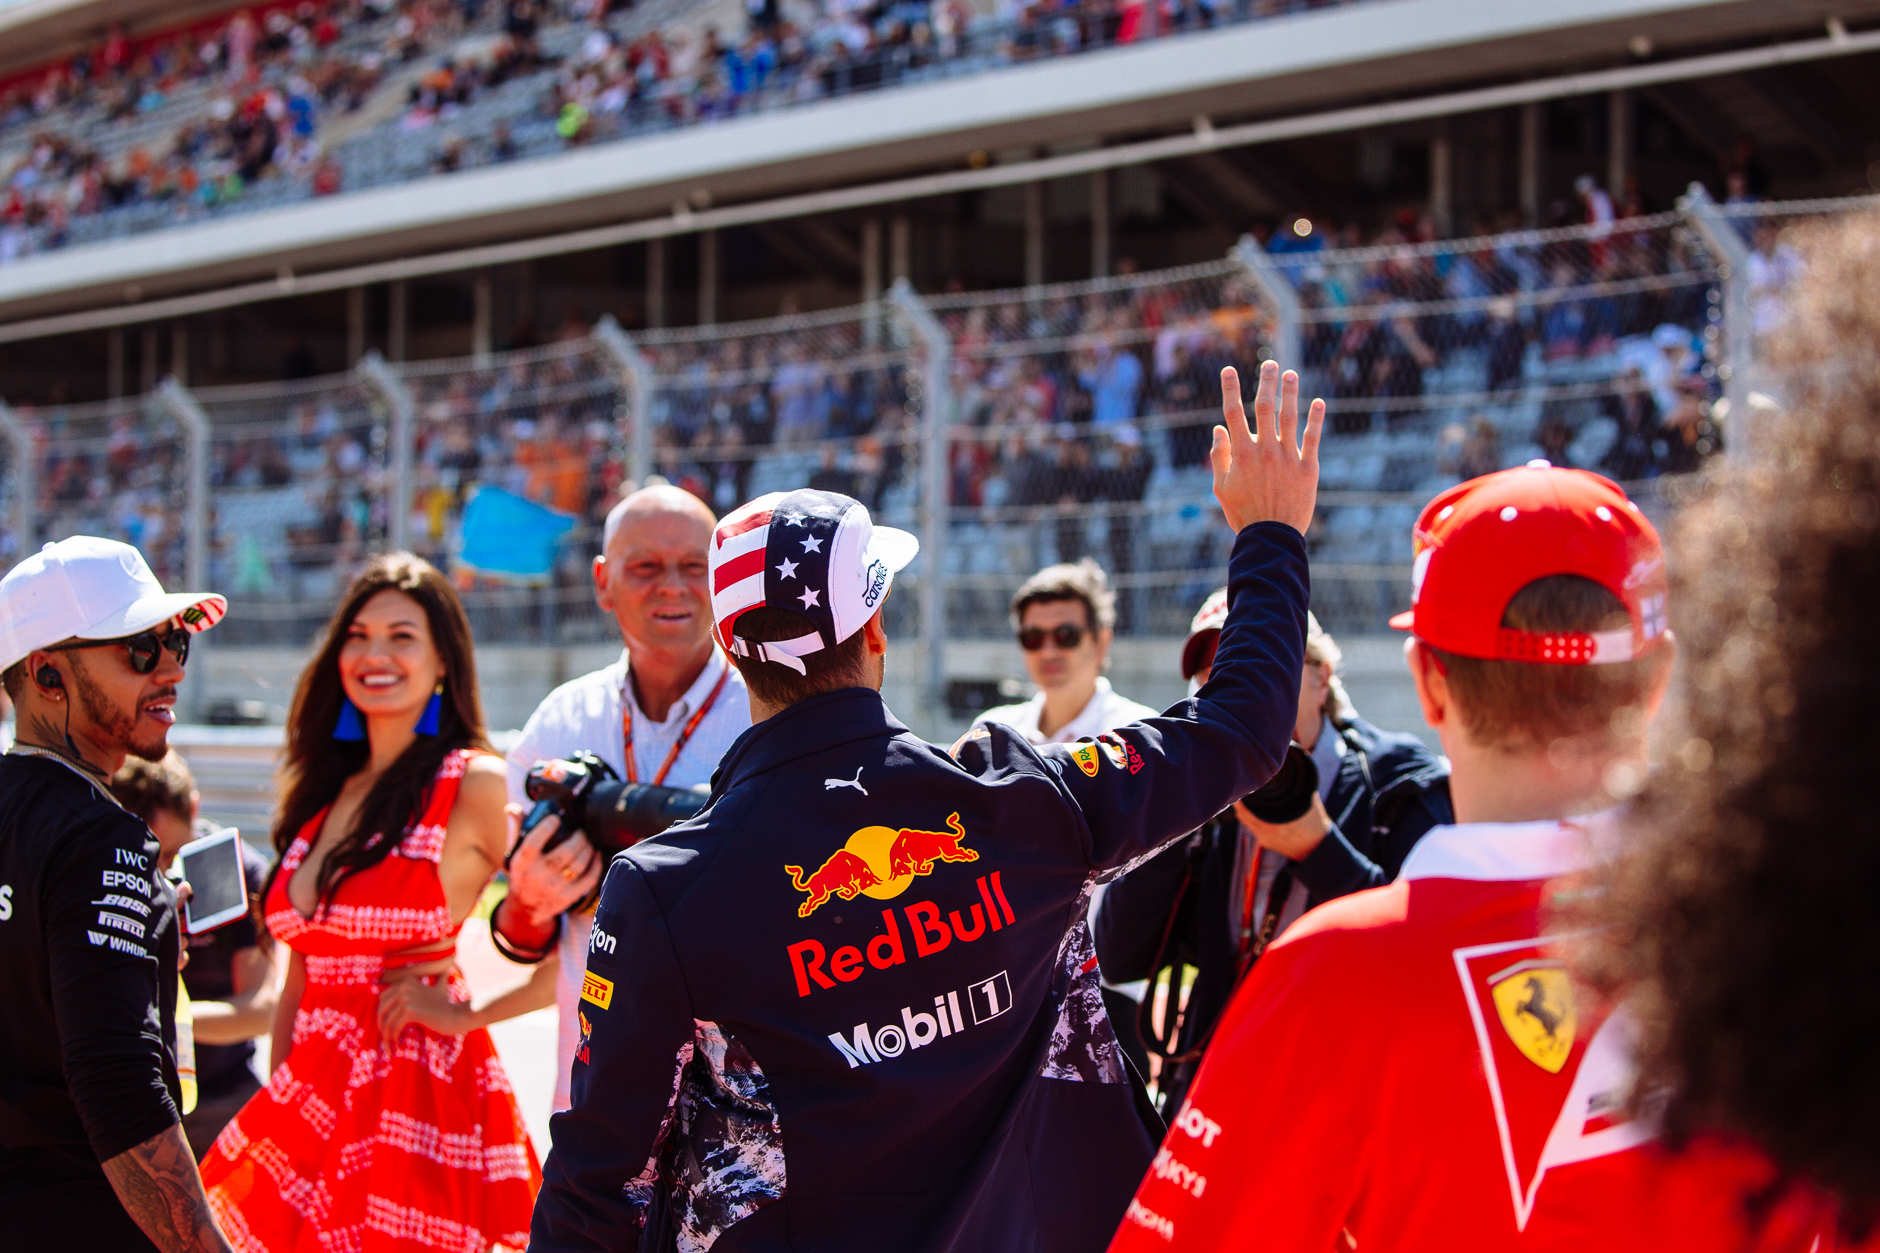 Red Bull Racing's Daniel Ricciardo prior to the pre-race driver's parade.